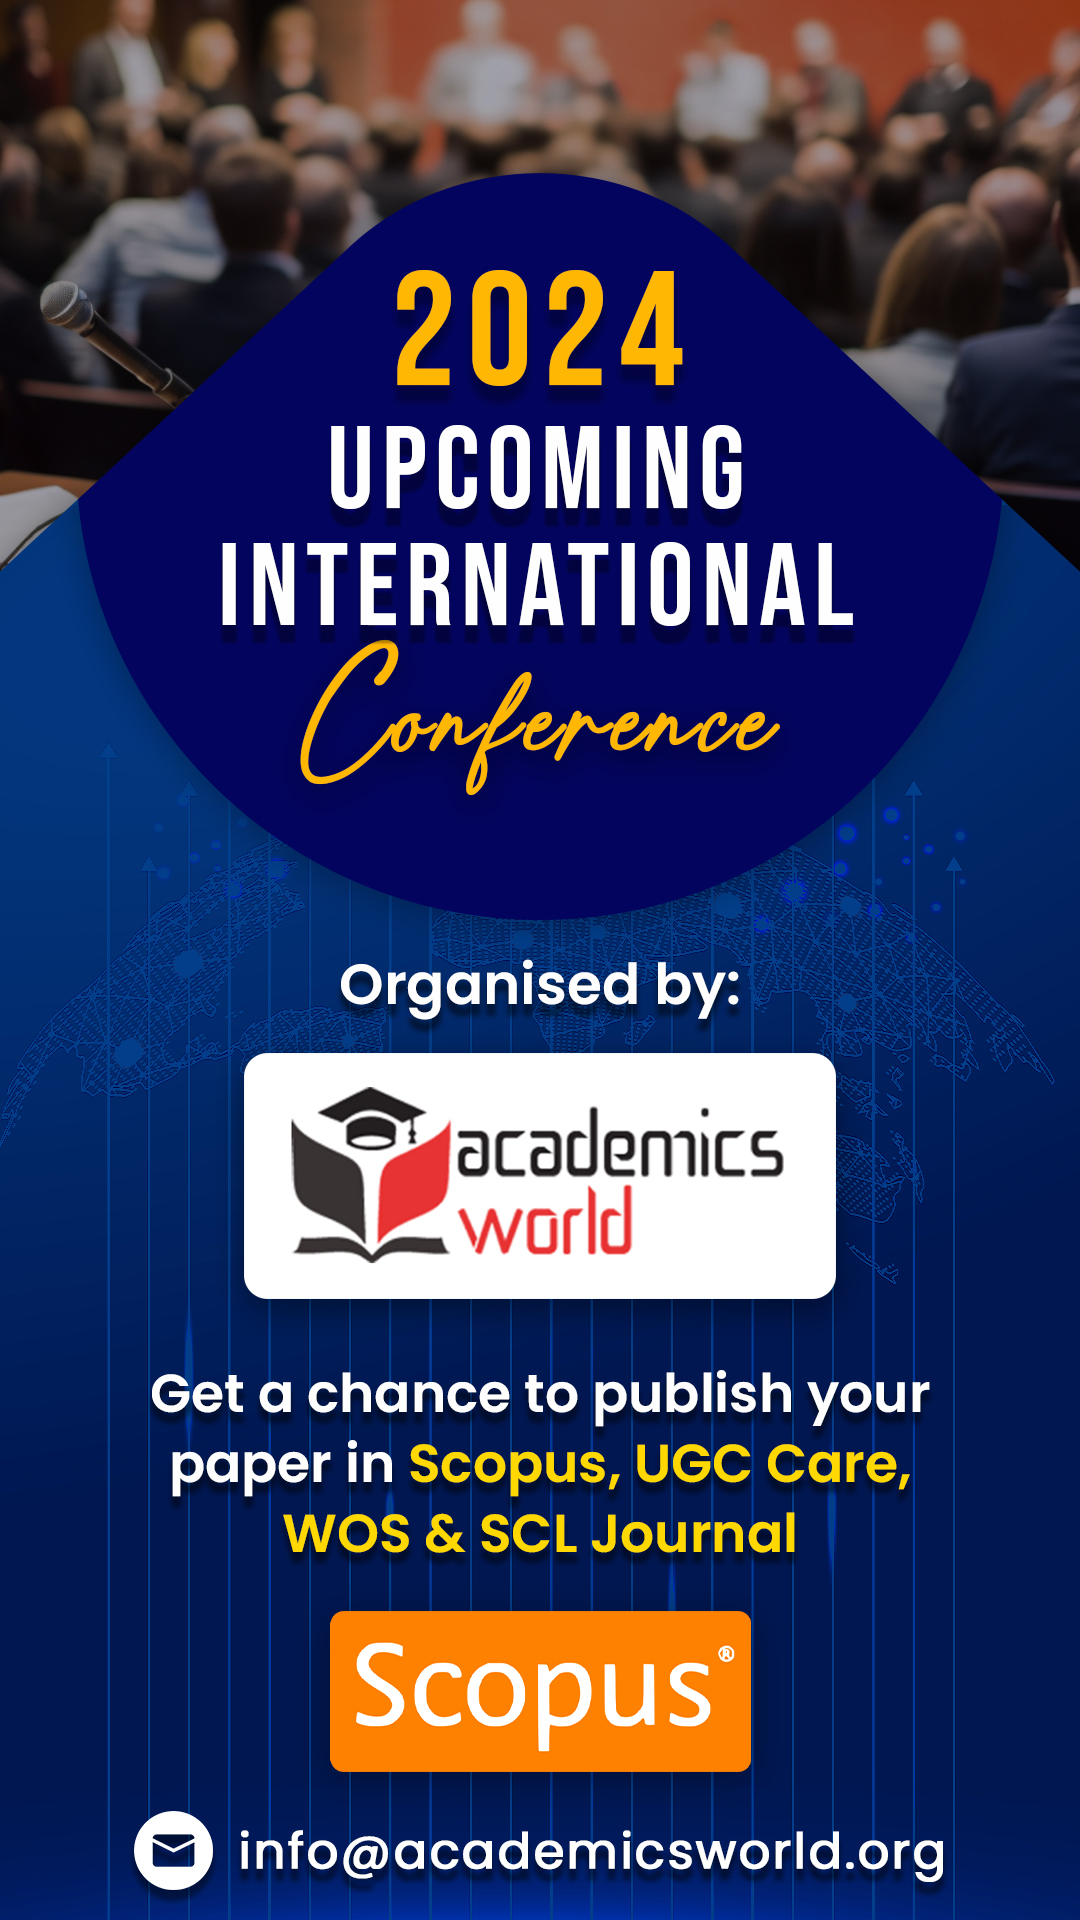 ACADEMICSWORLD International Conference